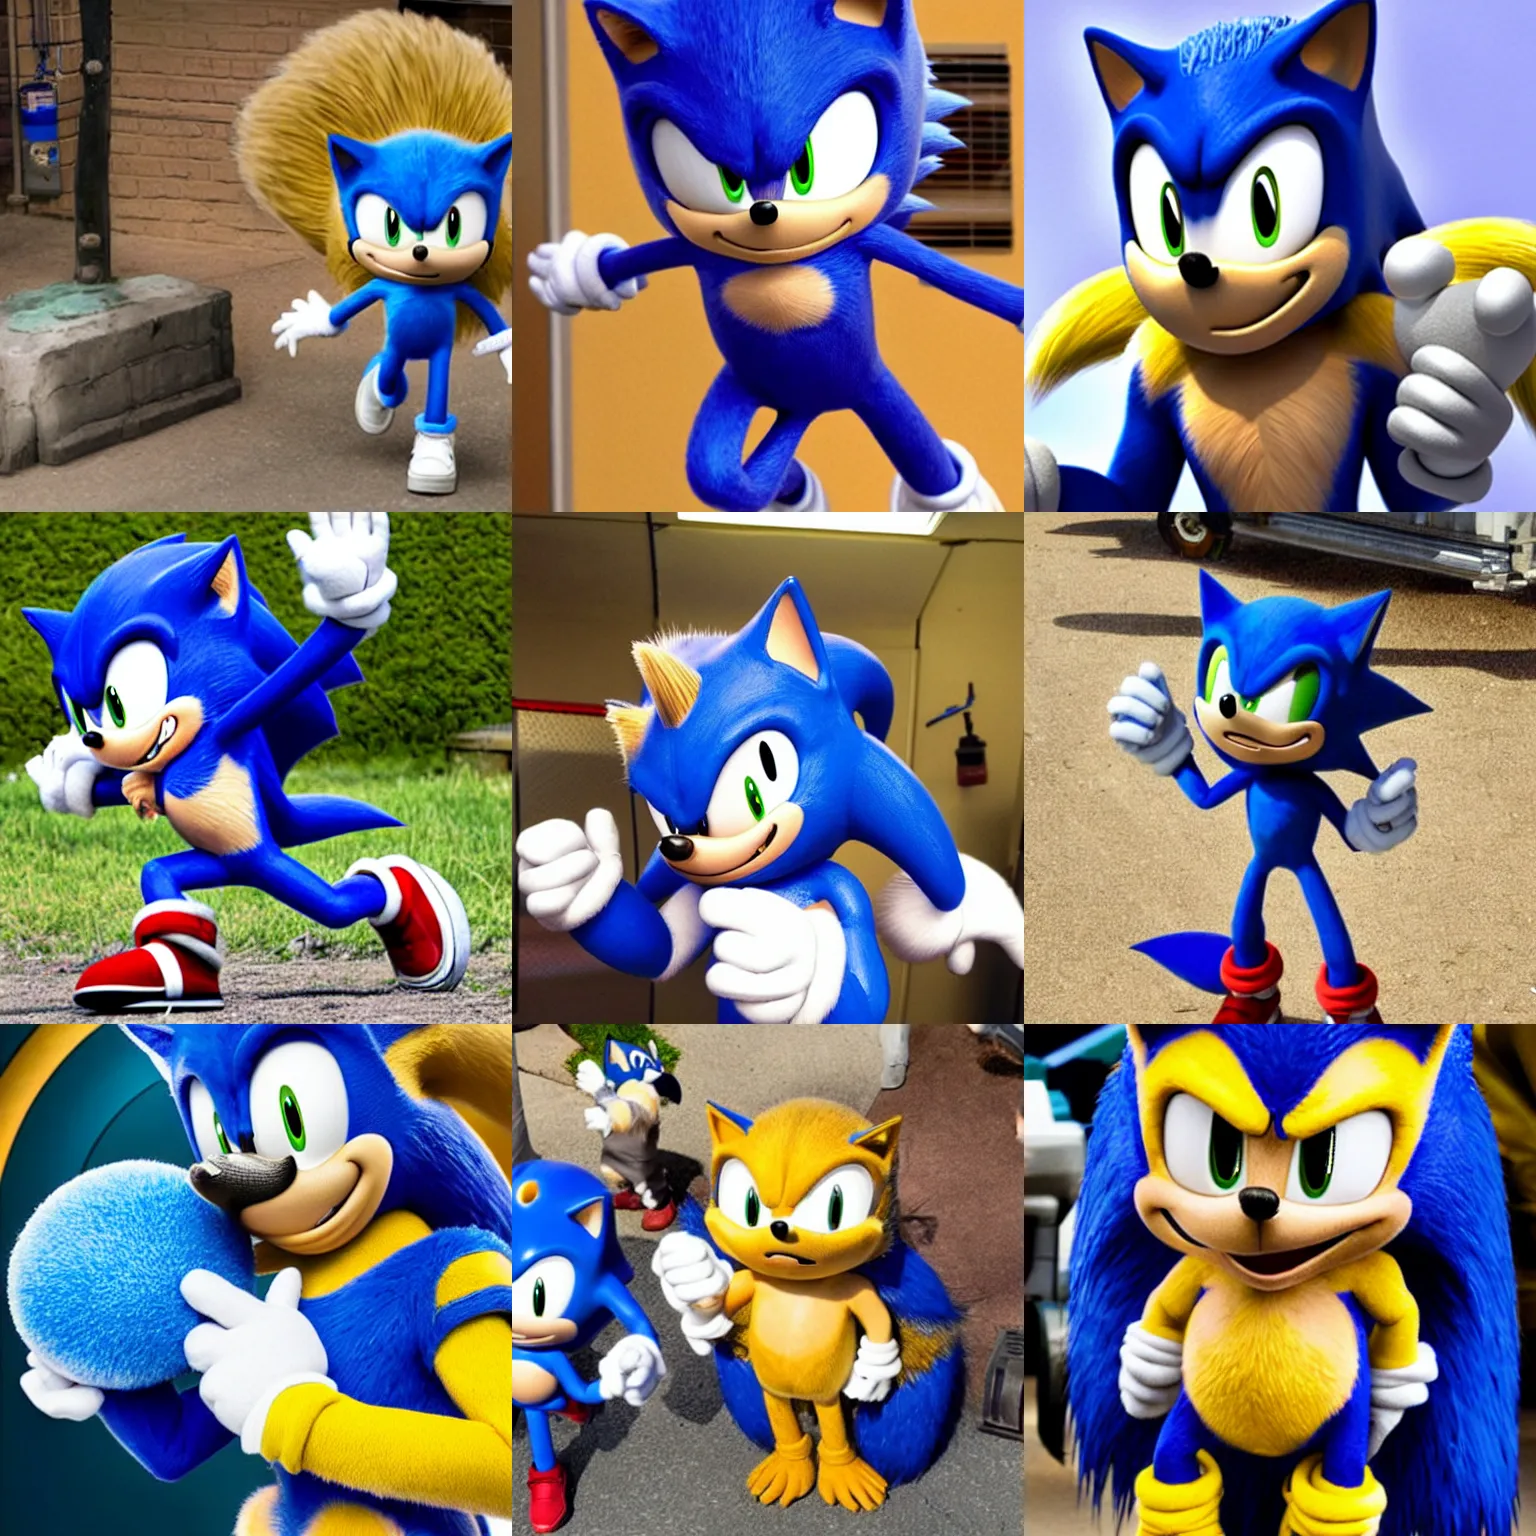 Prompt: Chris Pratt as Sonic the Hedgehog, set photograph